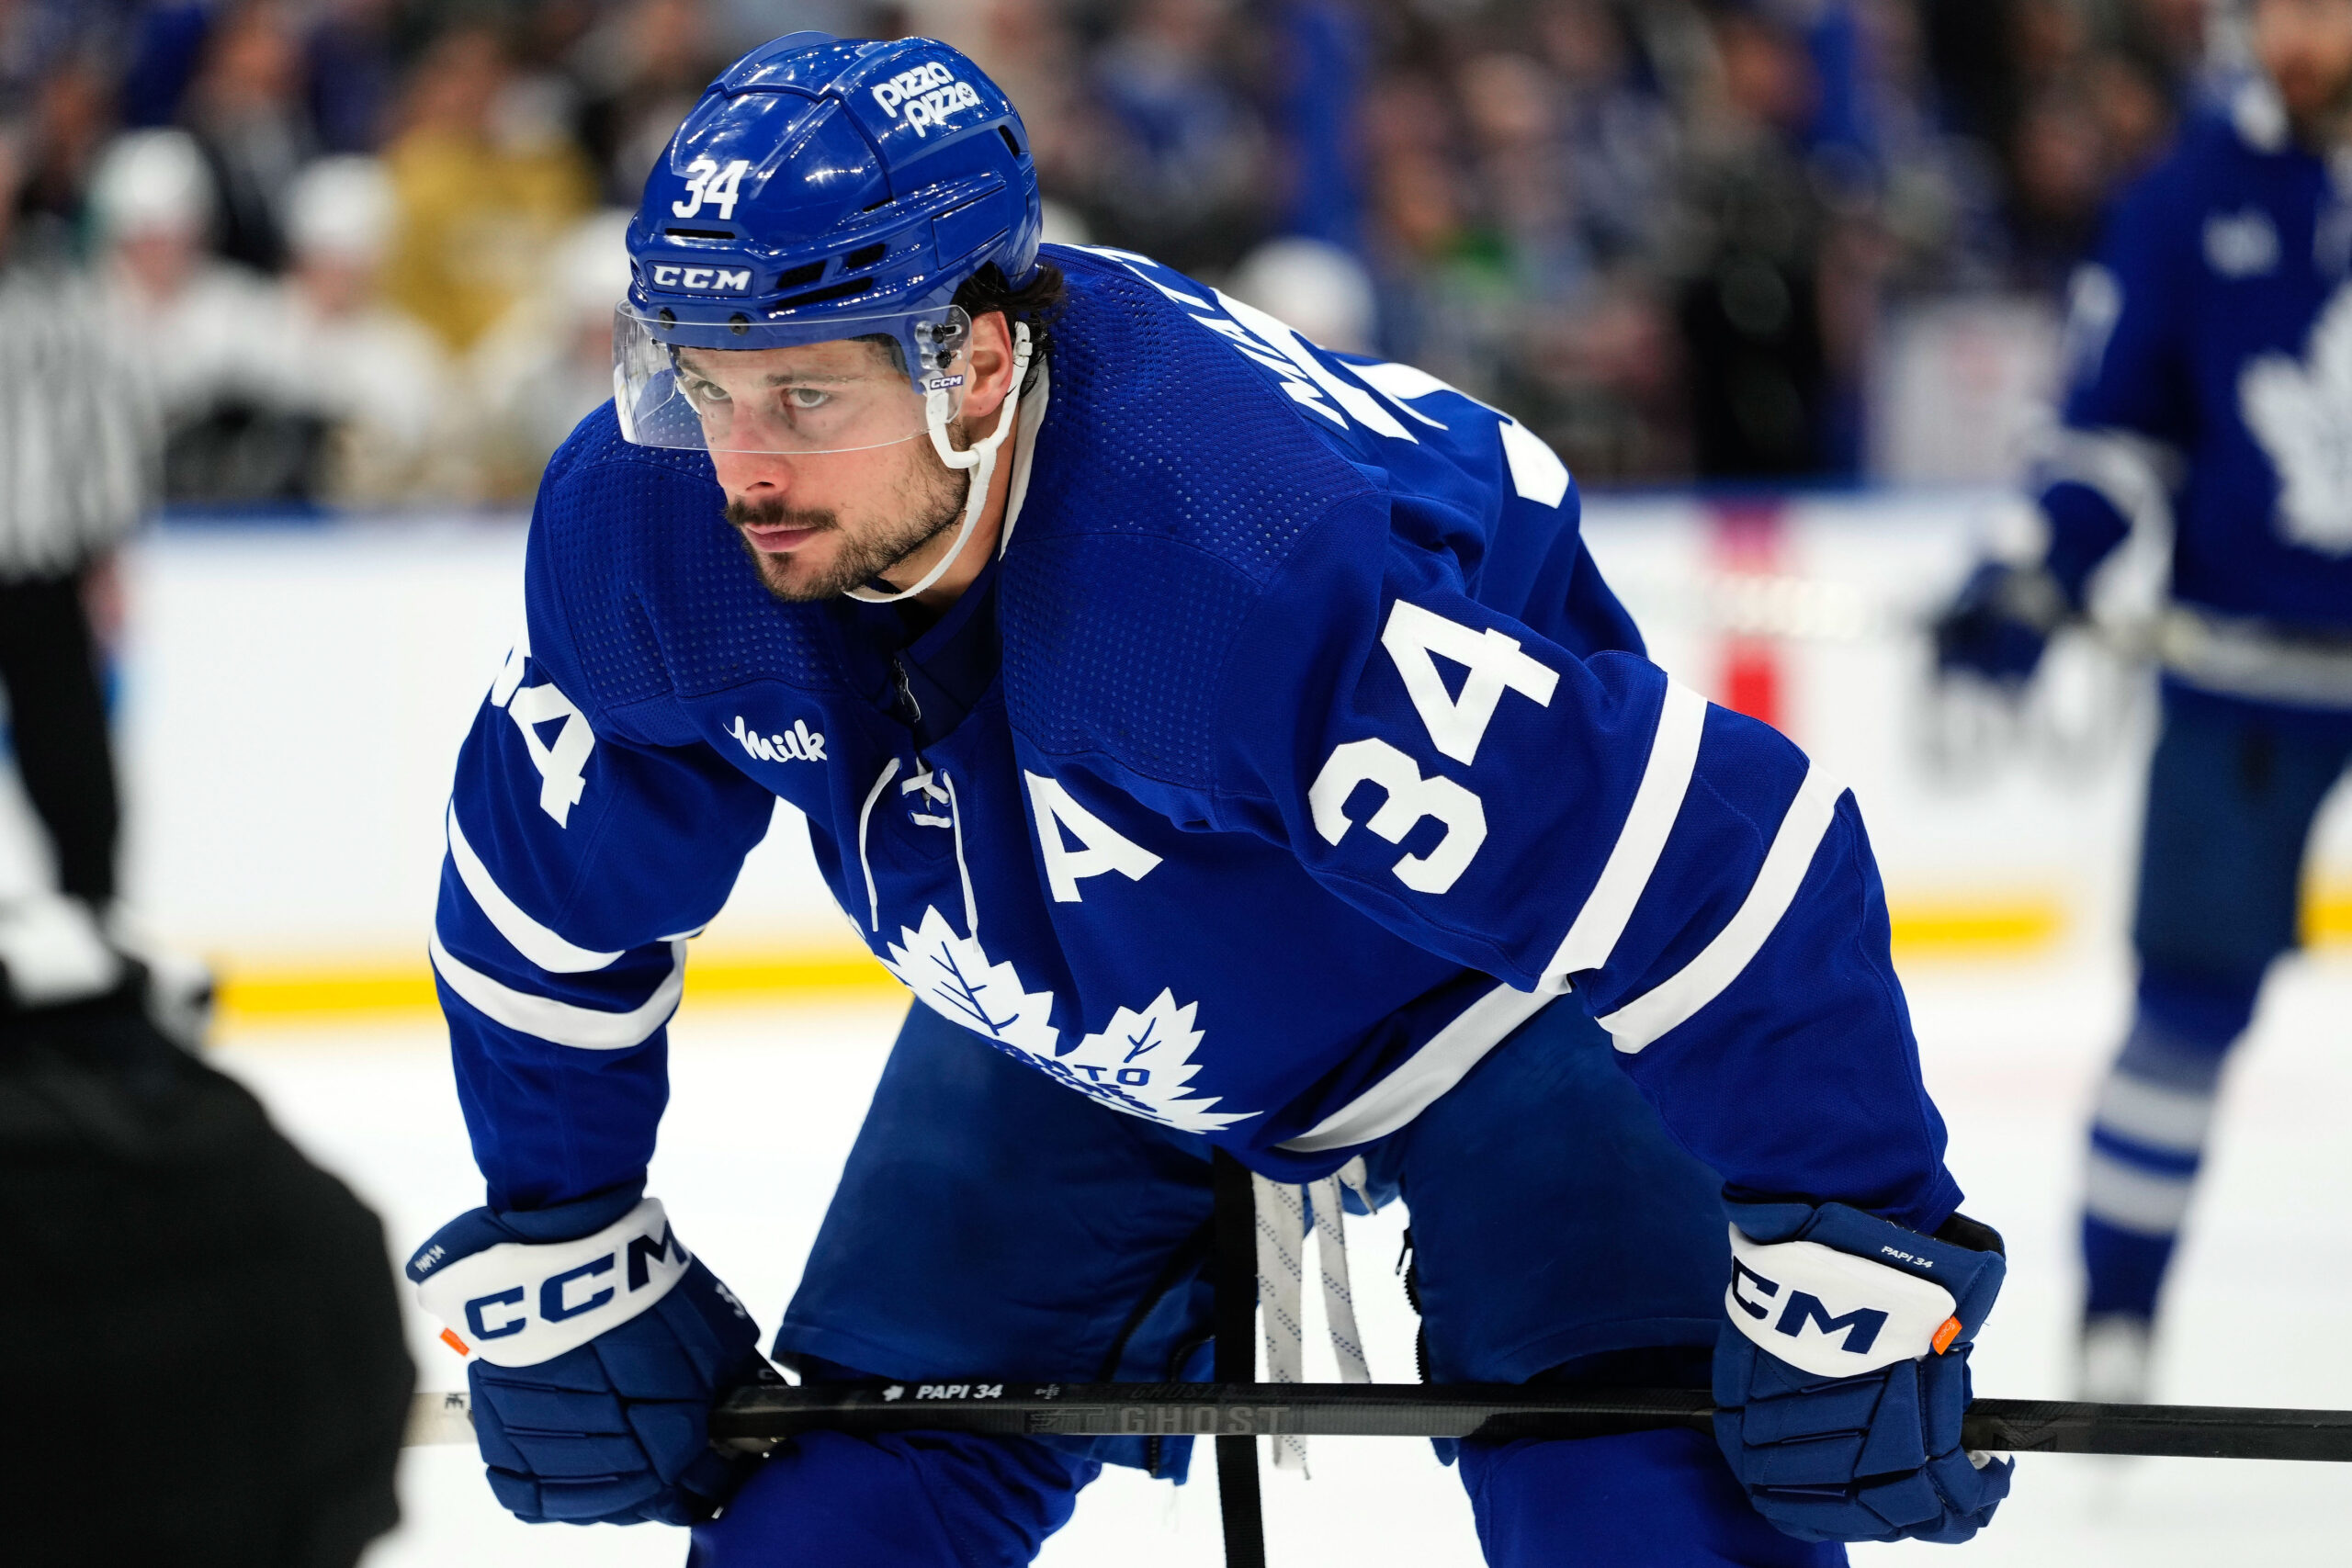 Toronto Maple Leafs Rocket Richard Winner Updated Status For Game 6